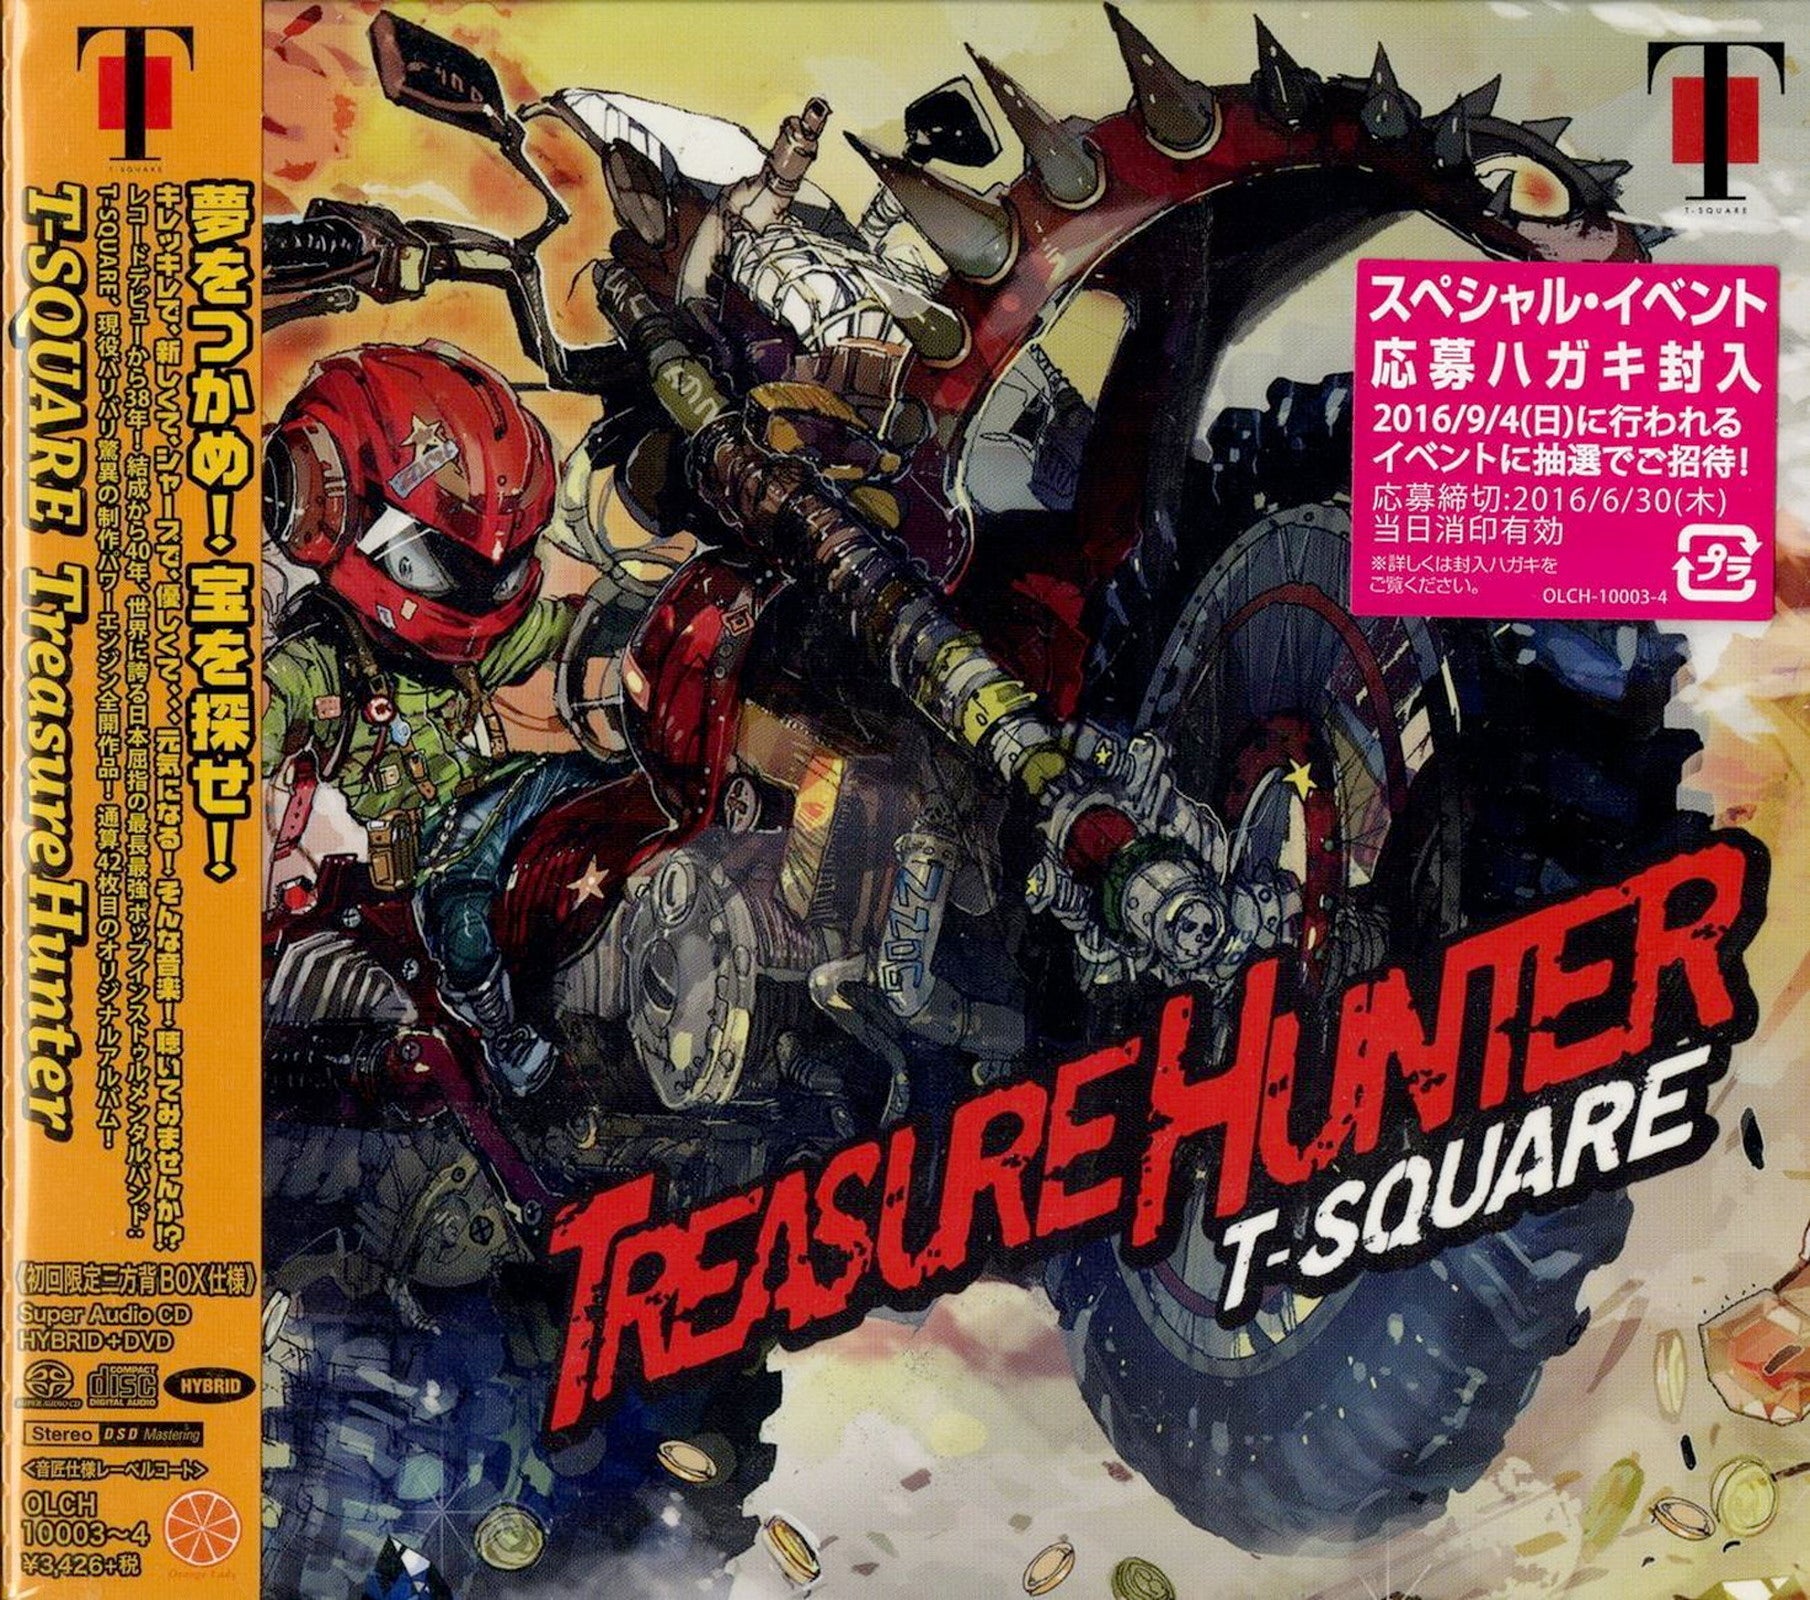 T-Square - Treasure Hunter - Japan CD+DVD – CDs Vinyl Japan Store 2016